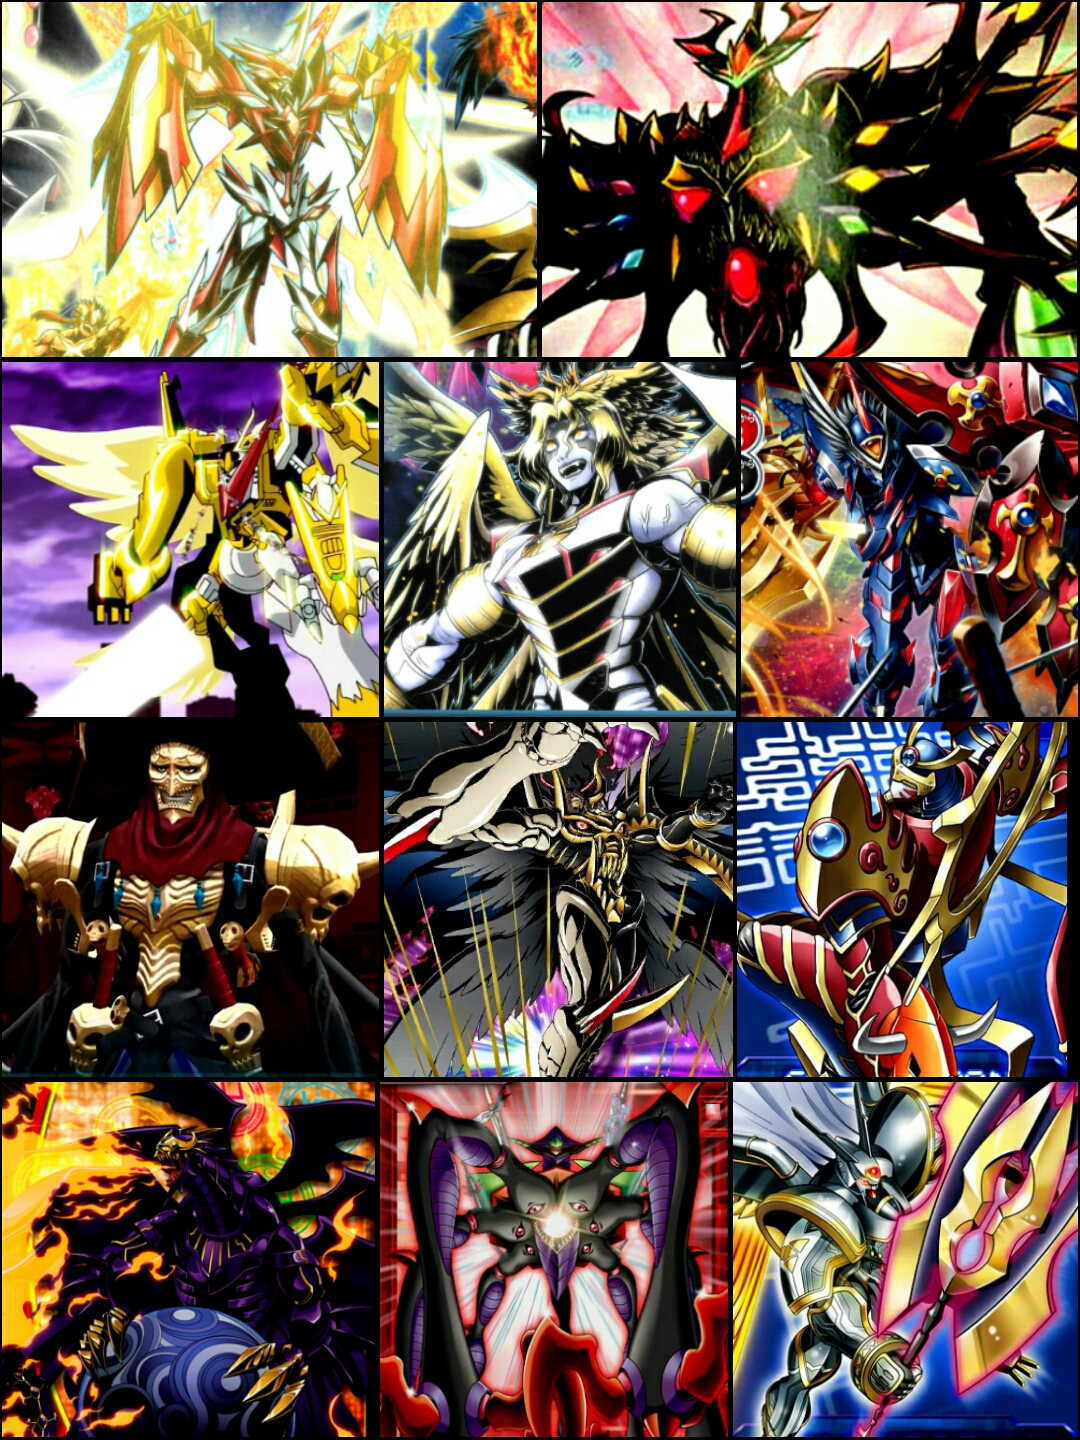 My Top 10 Favorite Digimon Characters by powerpup97 on DeviantArt